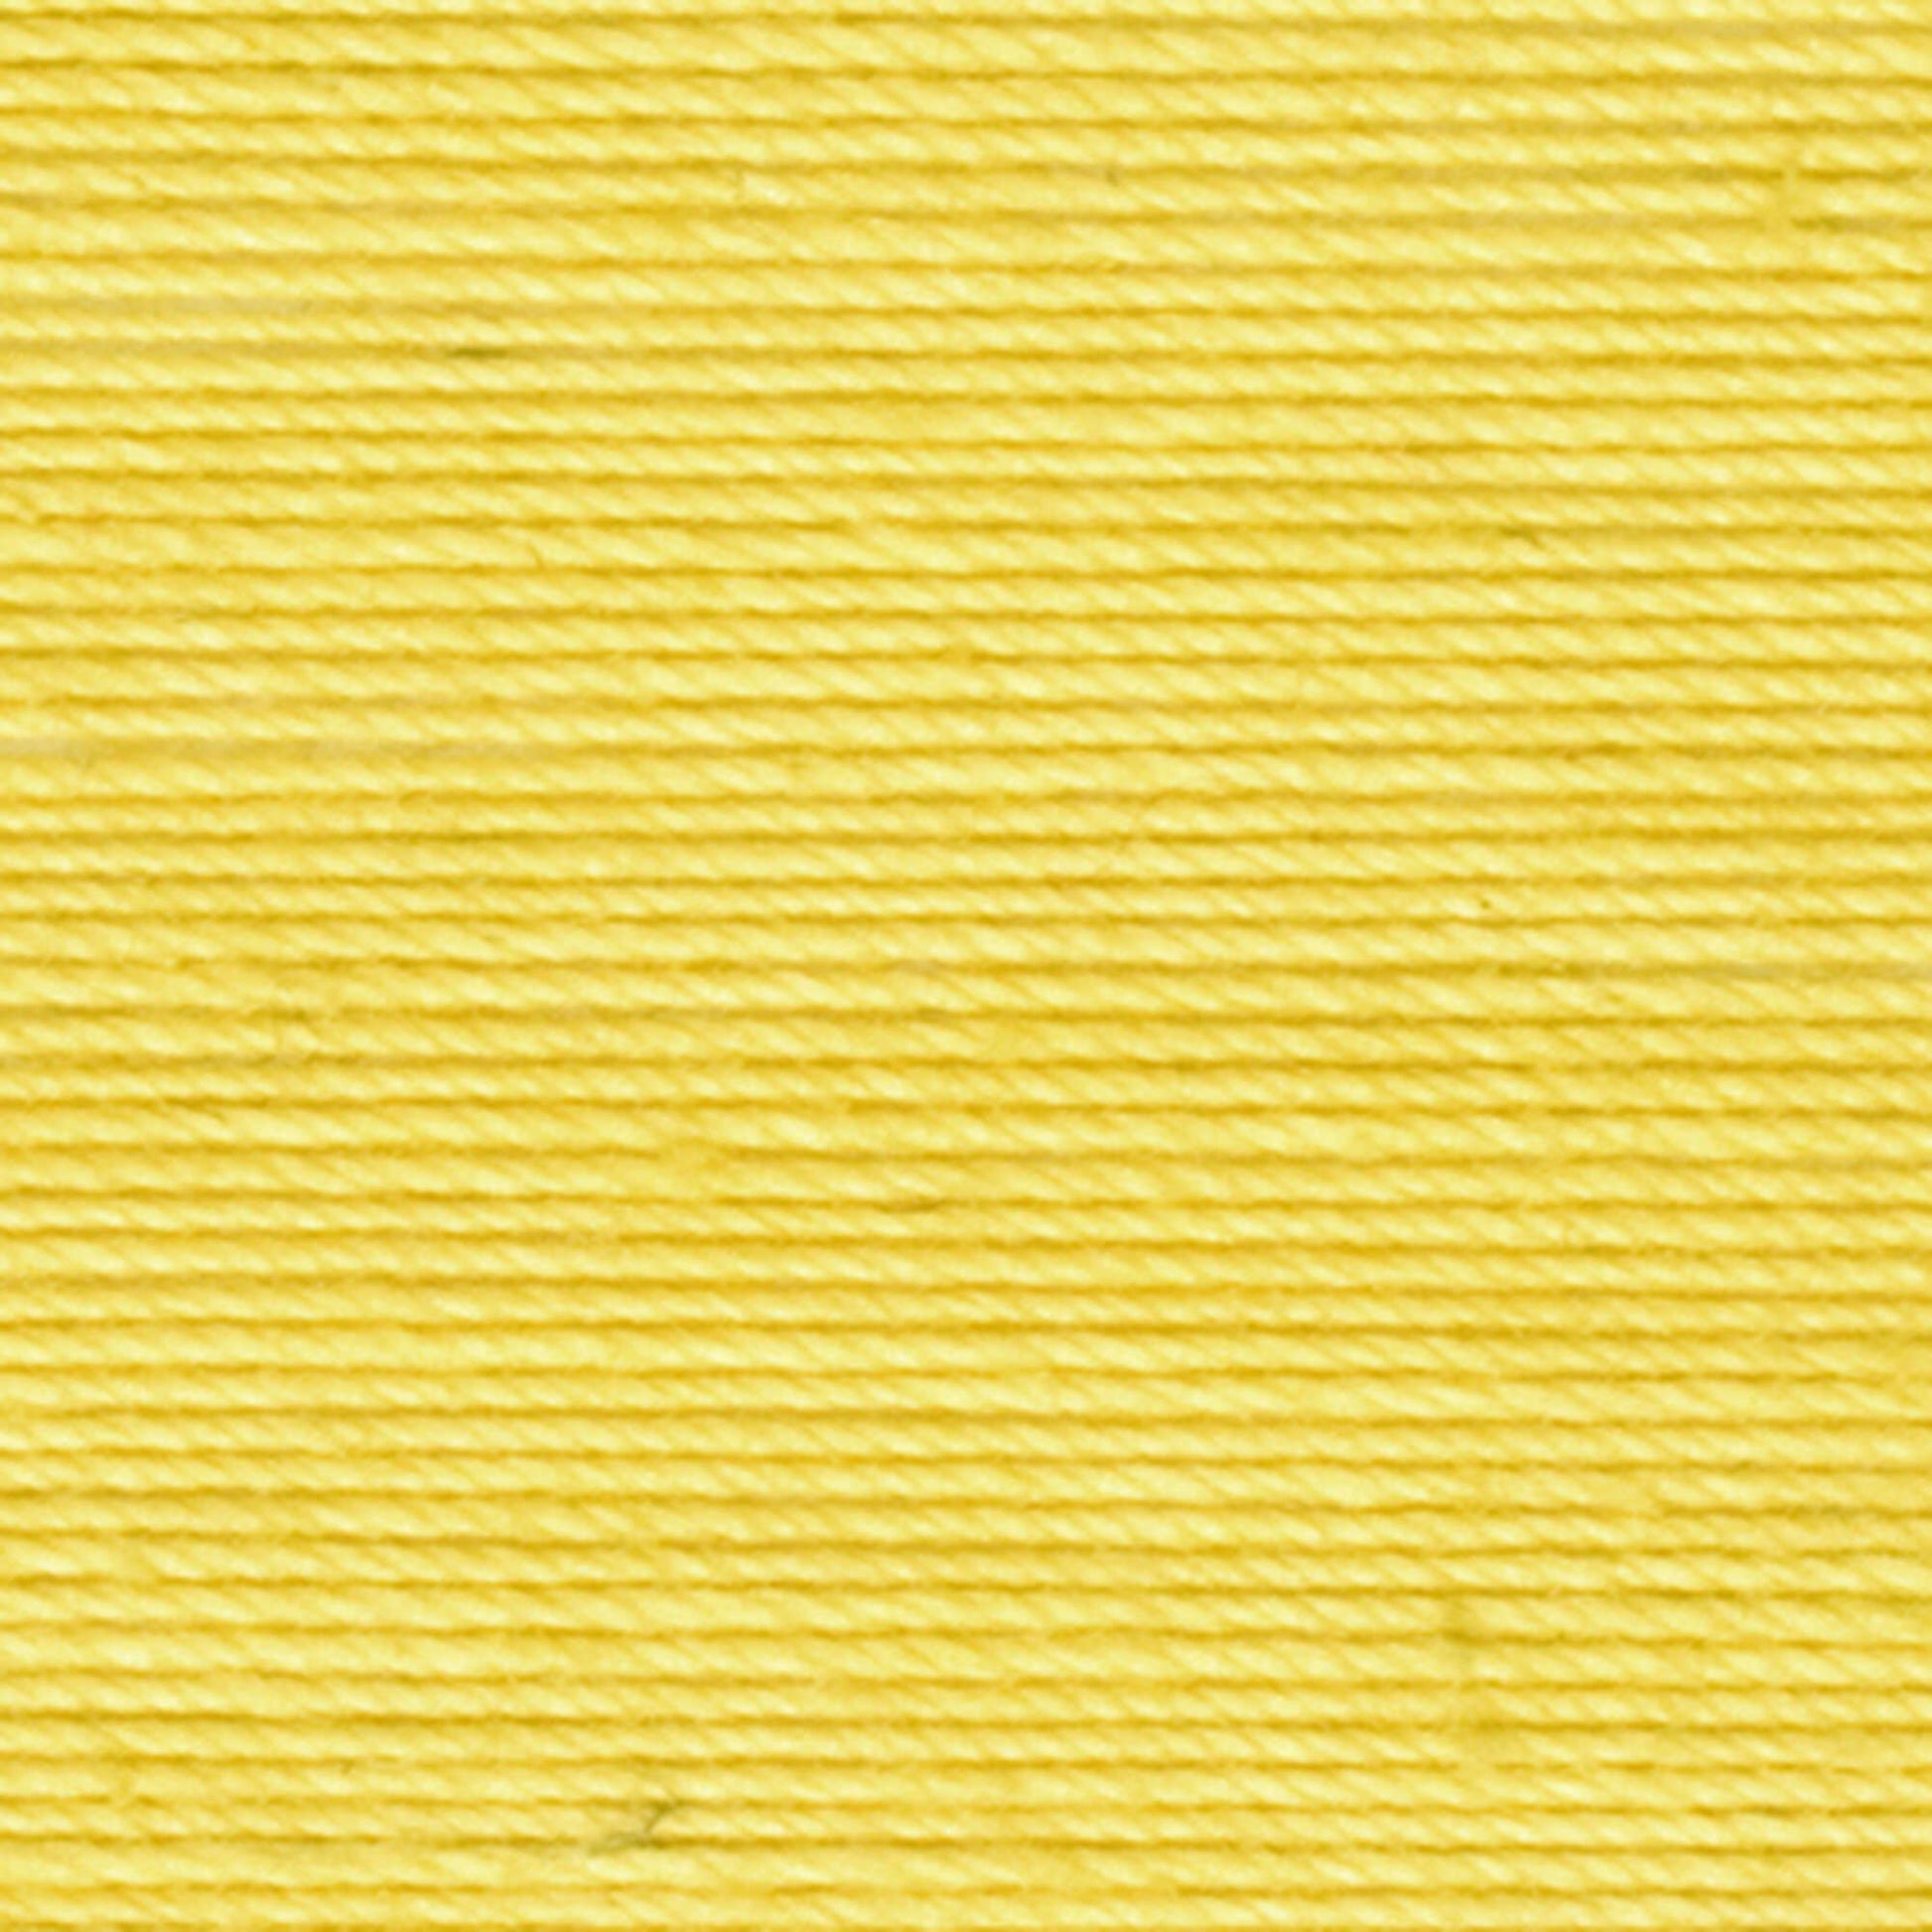 Aunt Lydia's Classic Crochet Thread Size 10 Golden Yellow